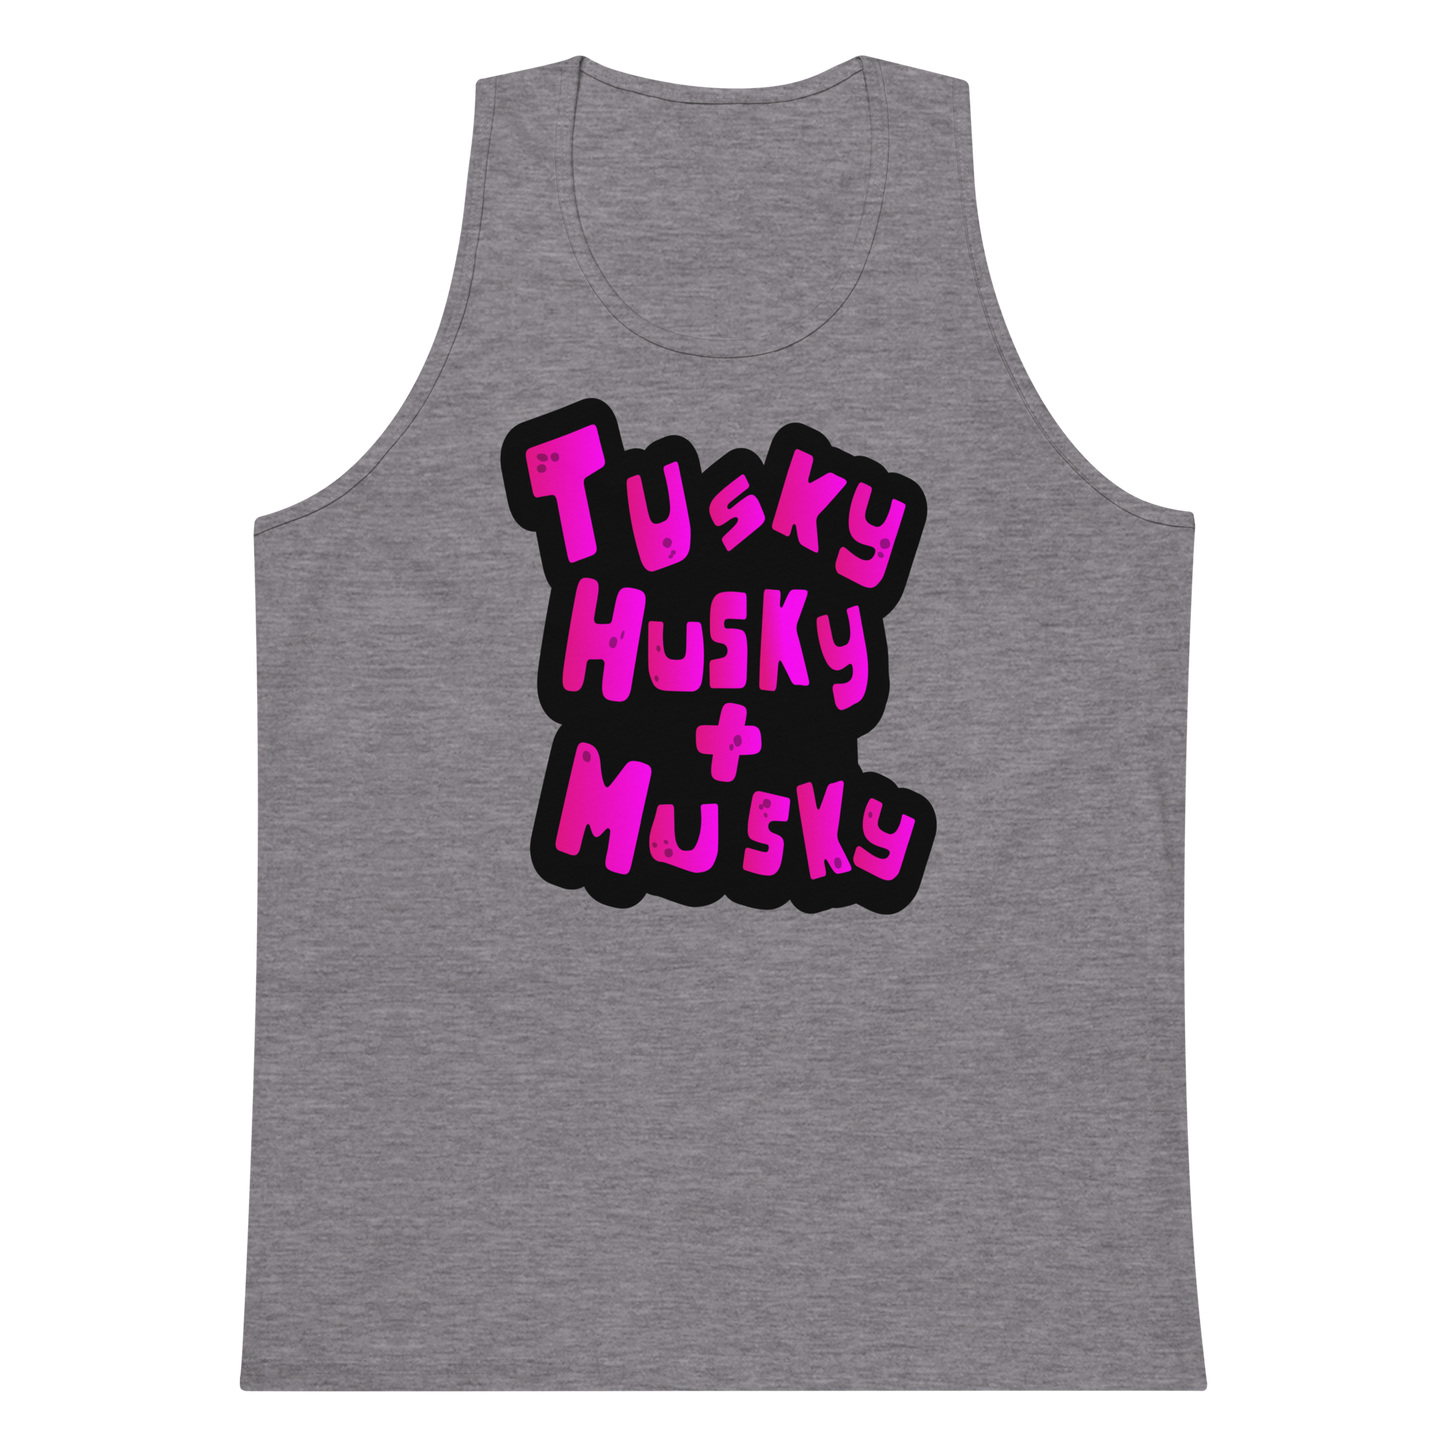 Tusky Husky and Musky